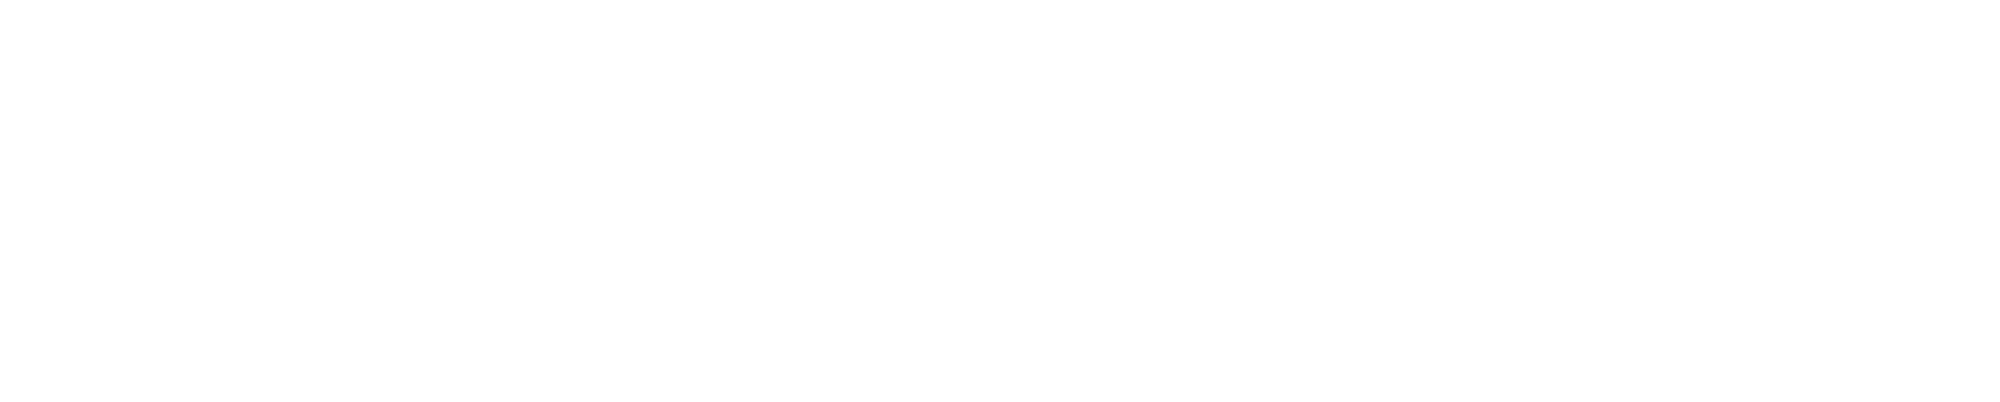 U of U Black Logo - The University of Chicago Library - The University of Chicago Library